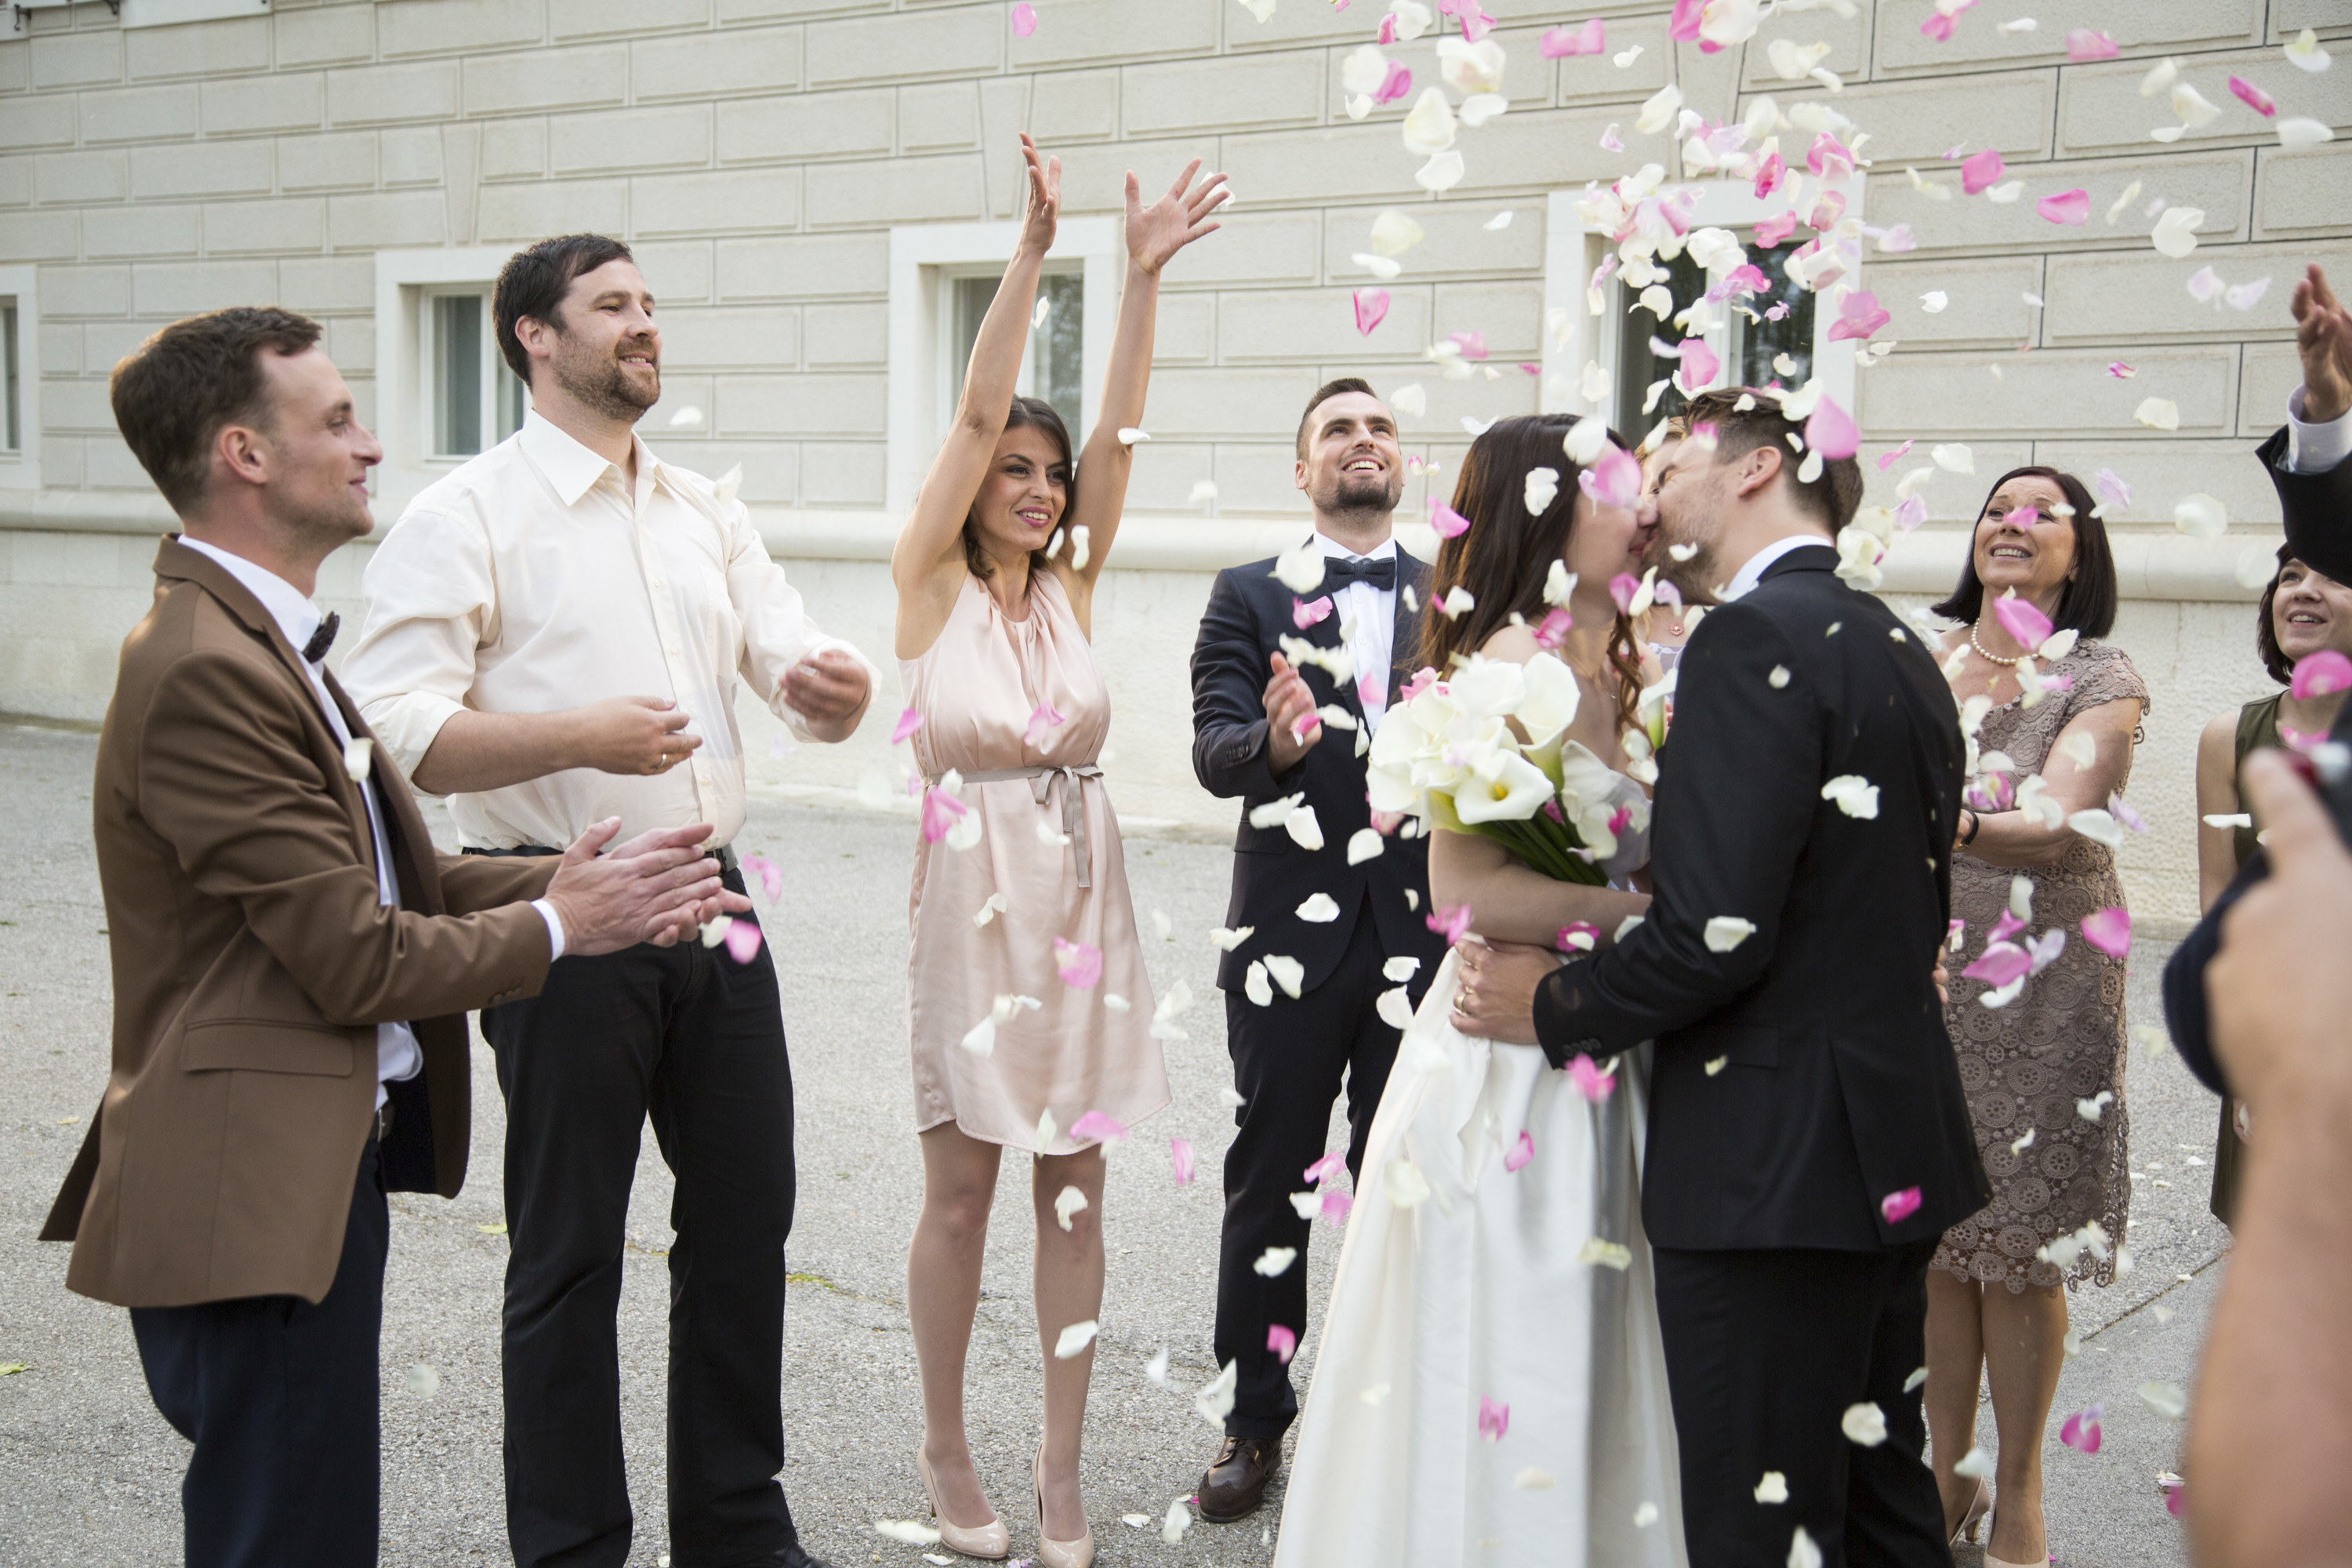 people celebrating a wedding